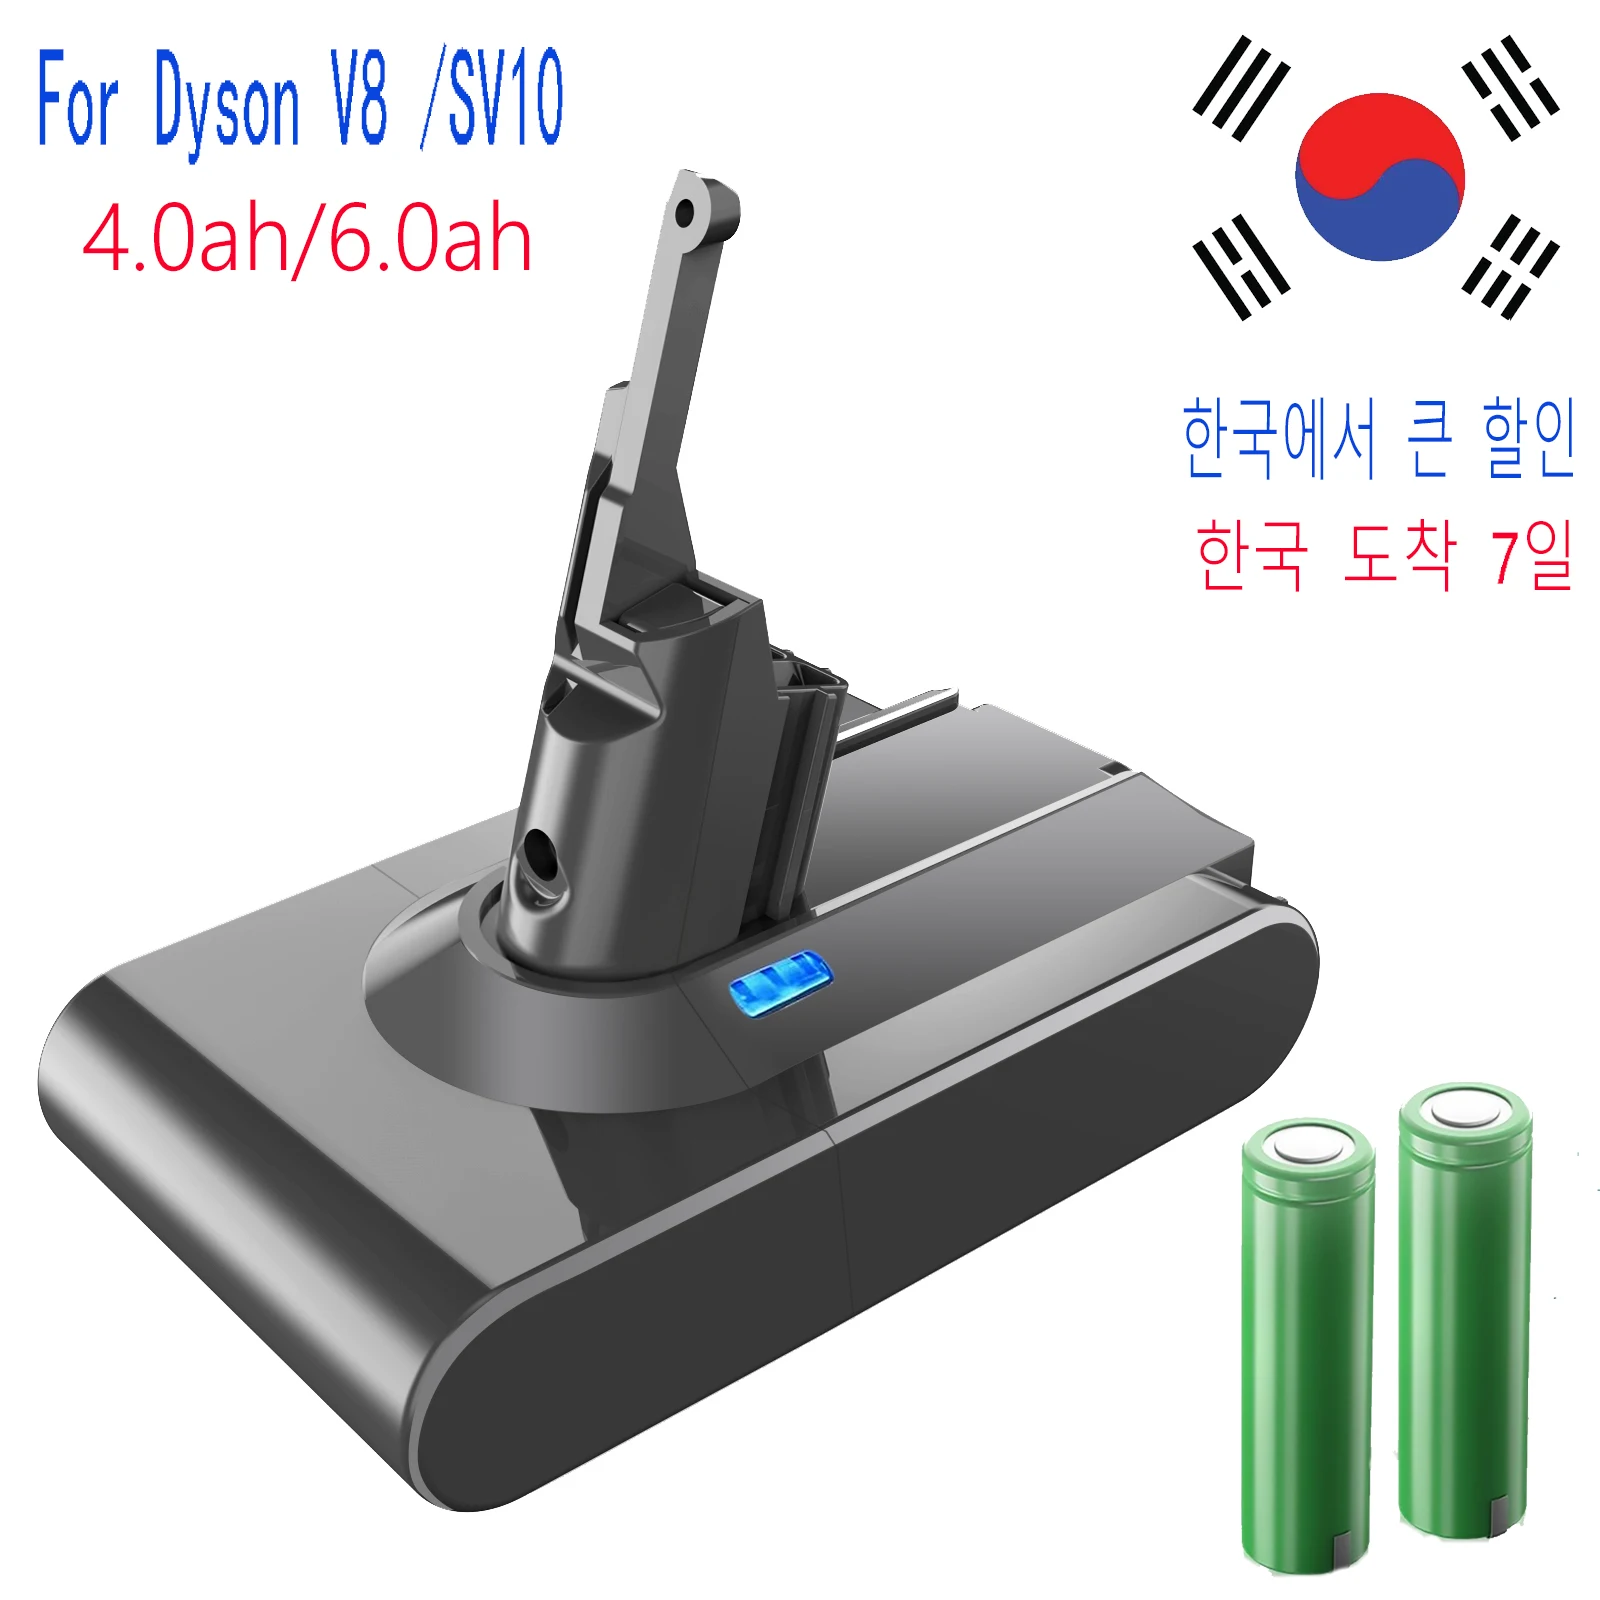 21.6V 6000mAh Replacement Battery for Dyson V8 Absolute Handheld Vacuum Cleaner for Dyson V8 SV10 Battery 18650